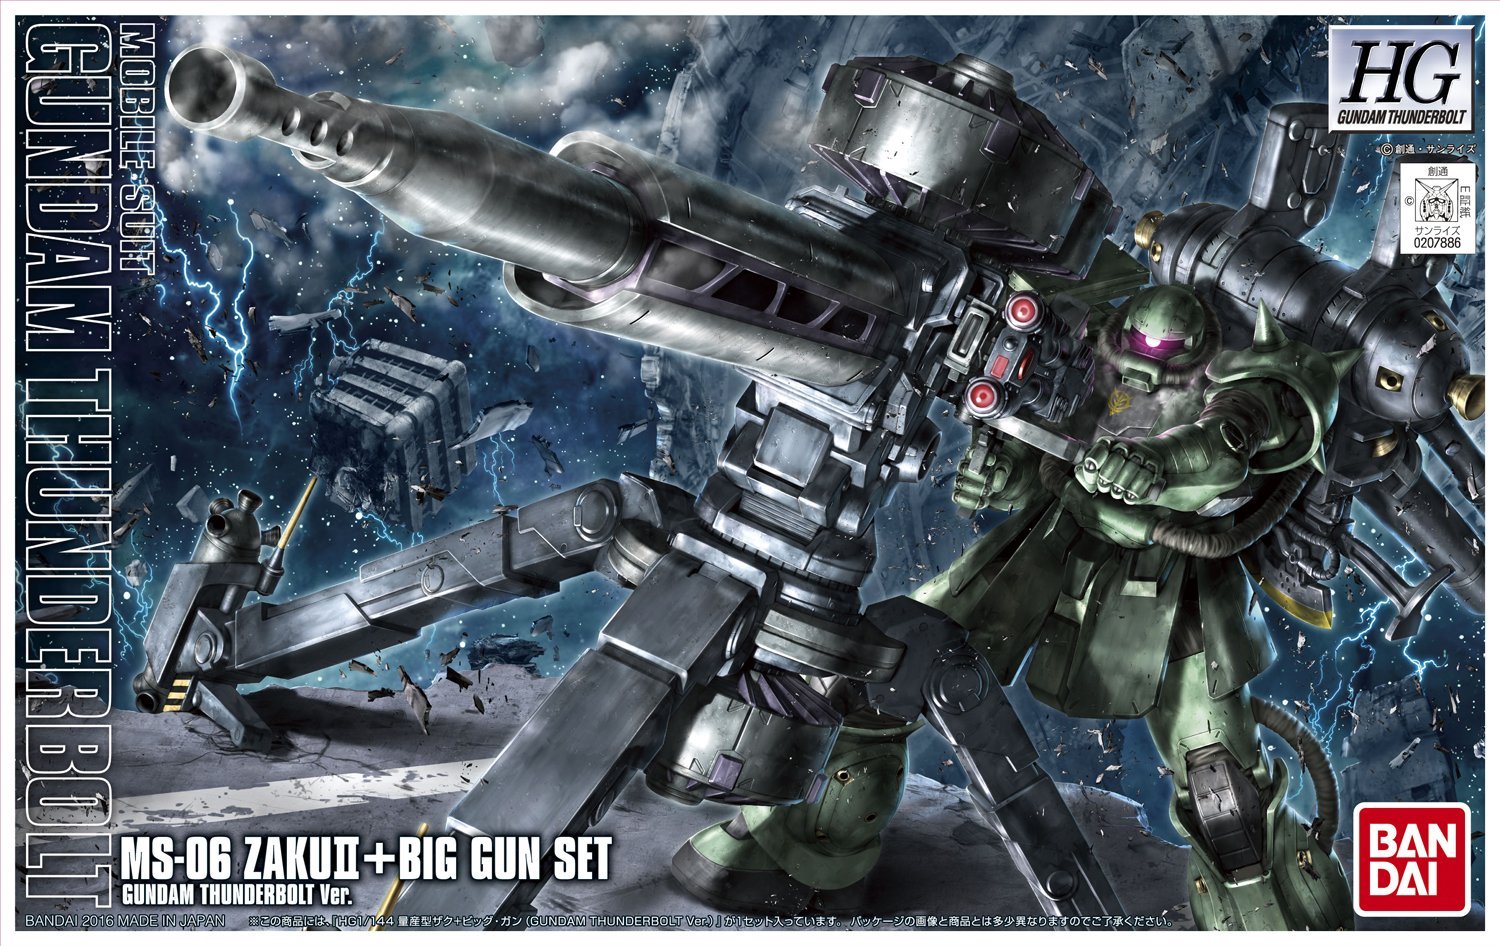 HG Gundam Thunderbolt Zaku II + Big Gun Set